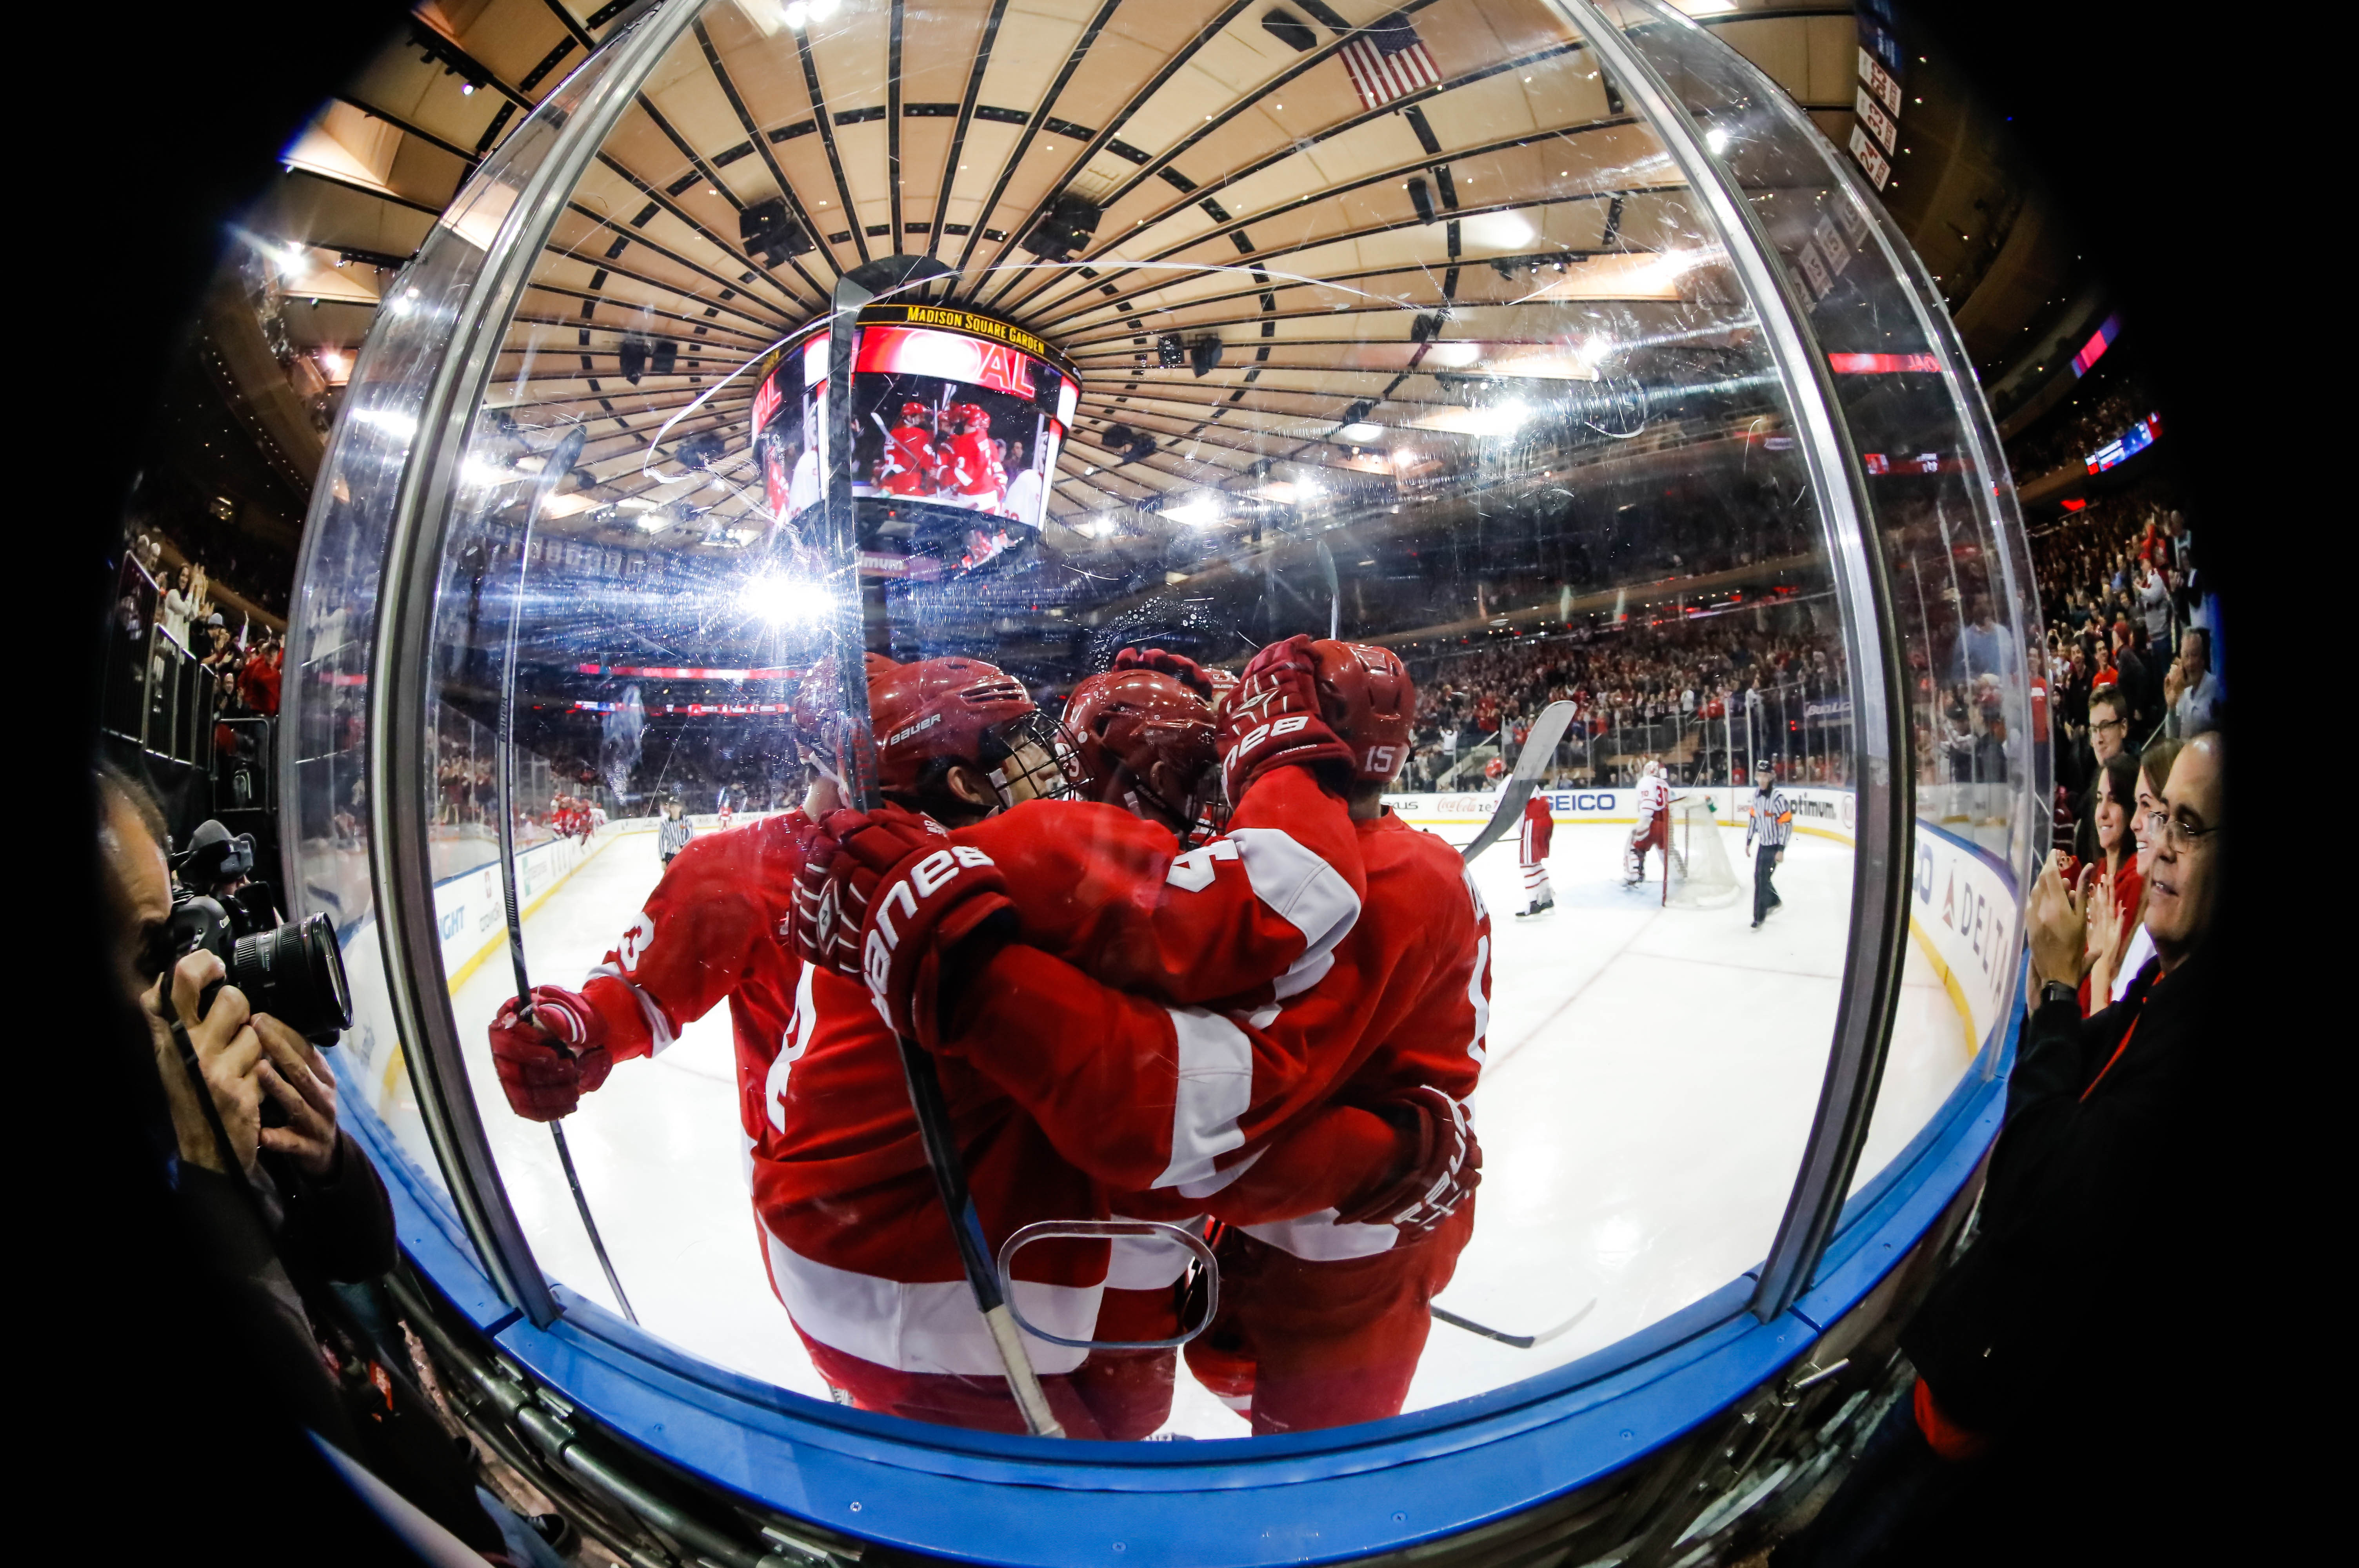 Photo Gallery: BU vs Cornell (11/28/15)Red Hot Hockey